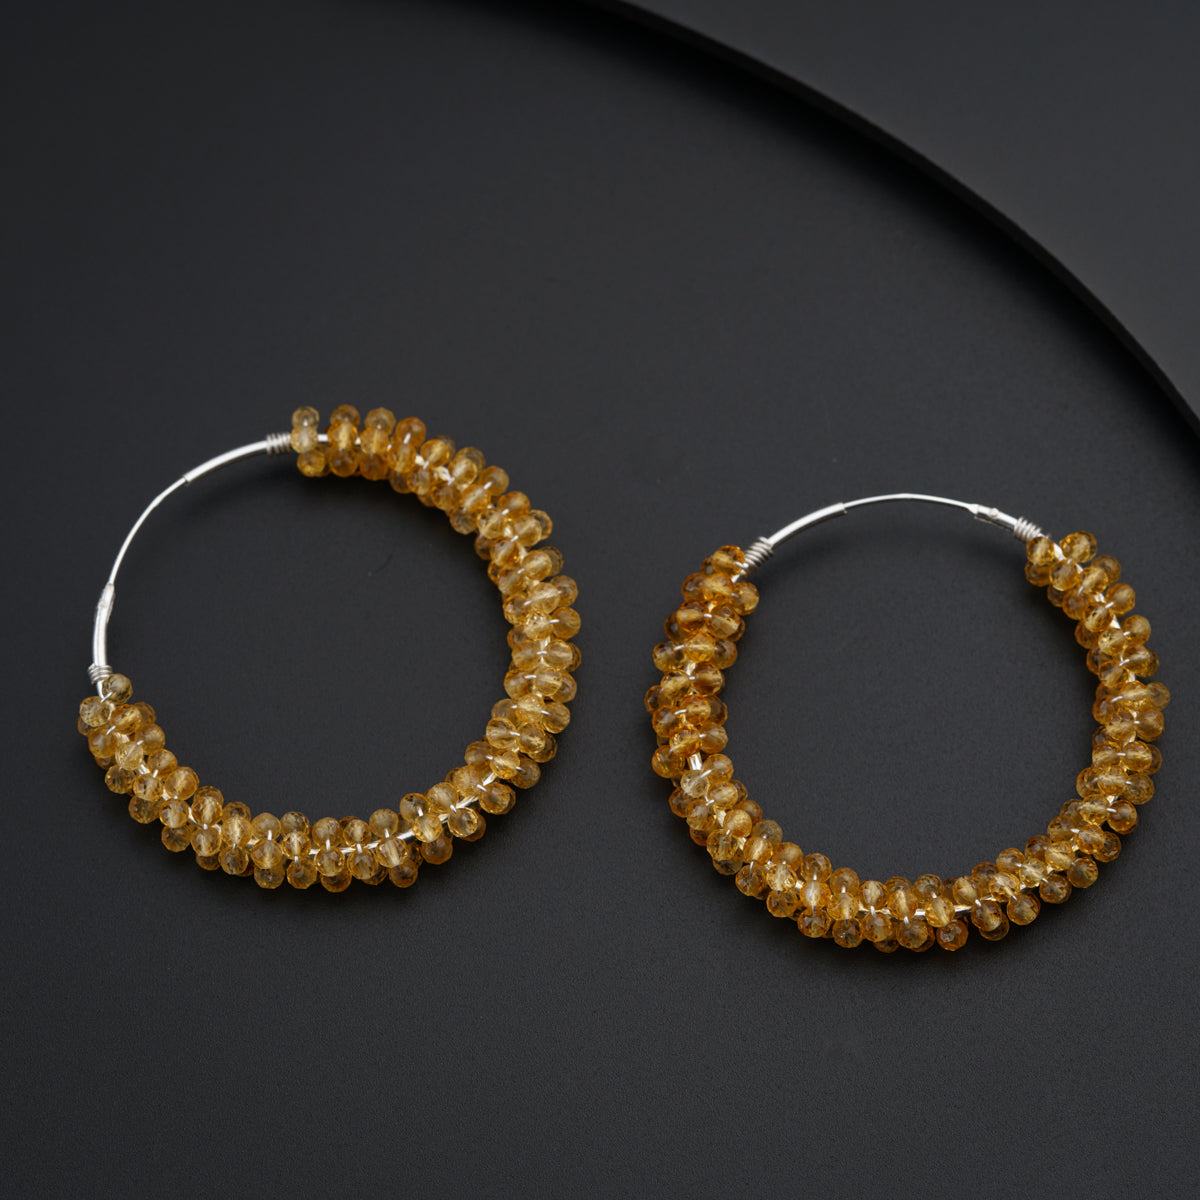 a pair of hoop earrings made of glass beads